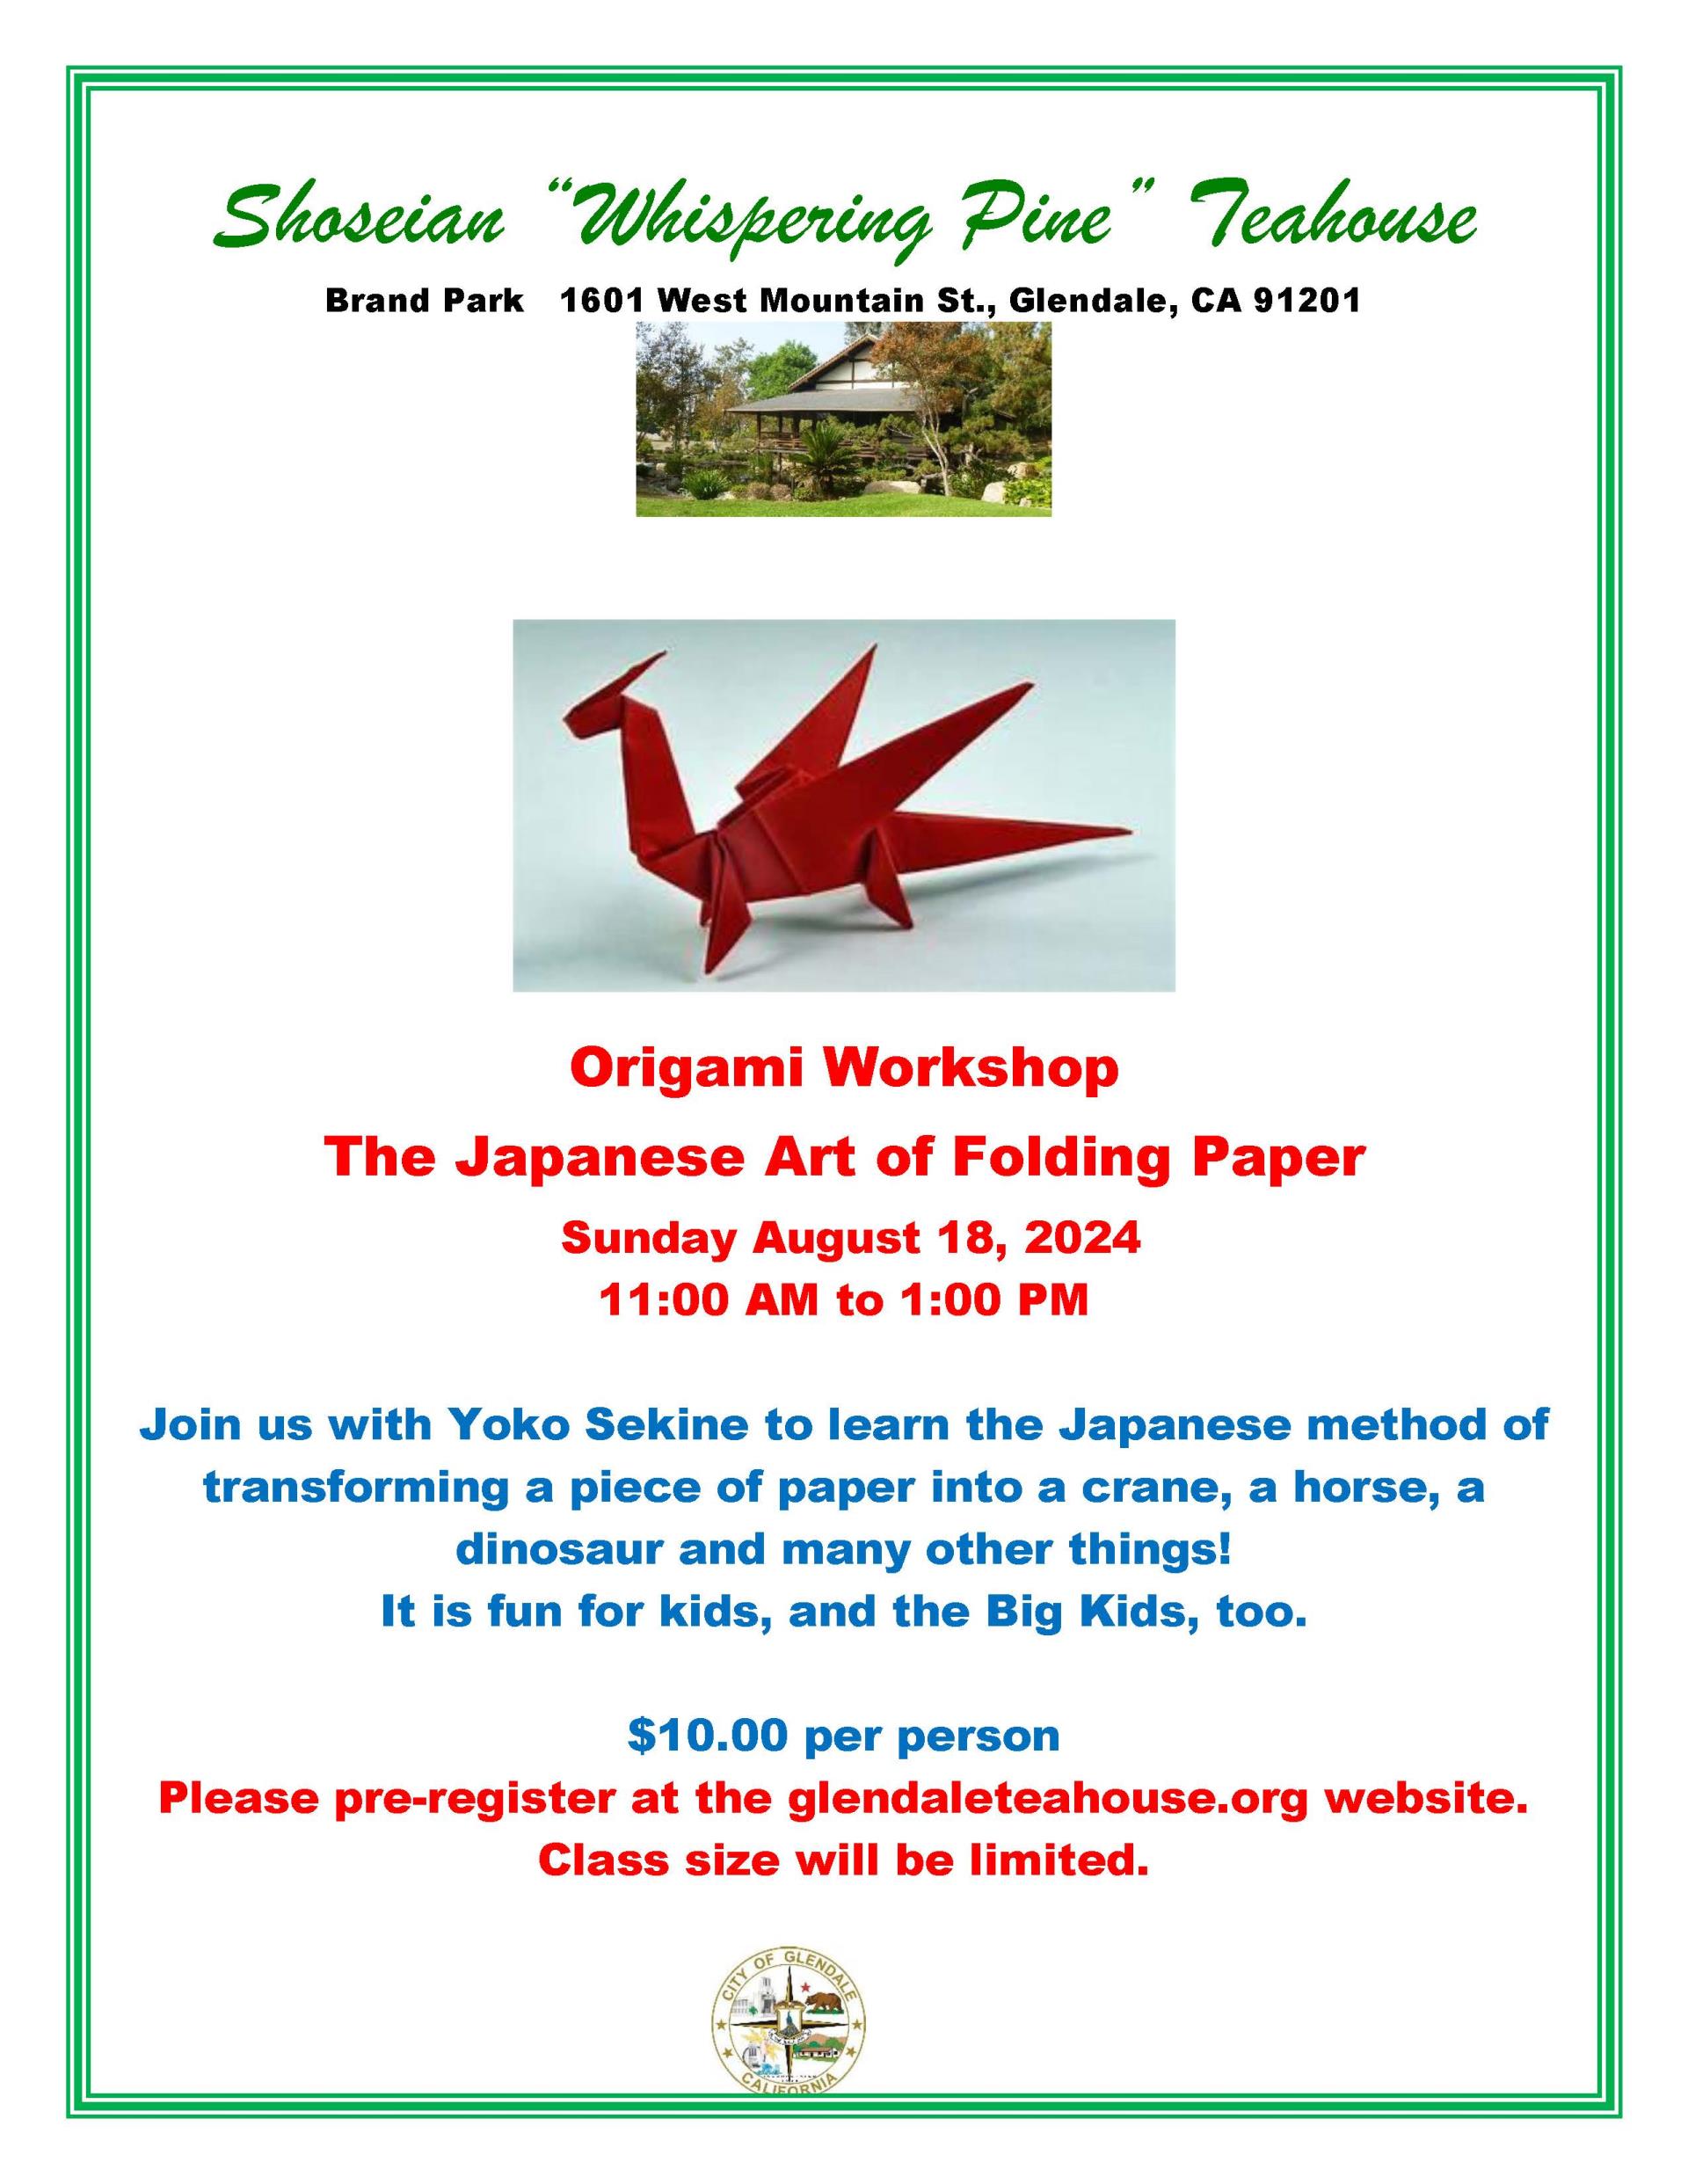 Shoseian Origami Workshop - Aug 18 2024